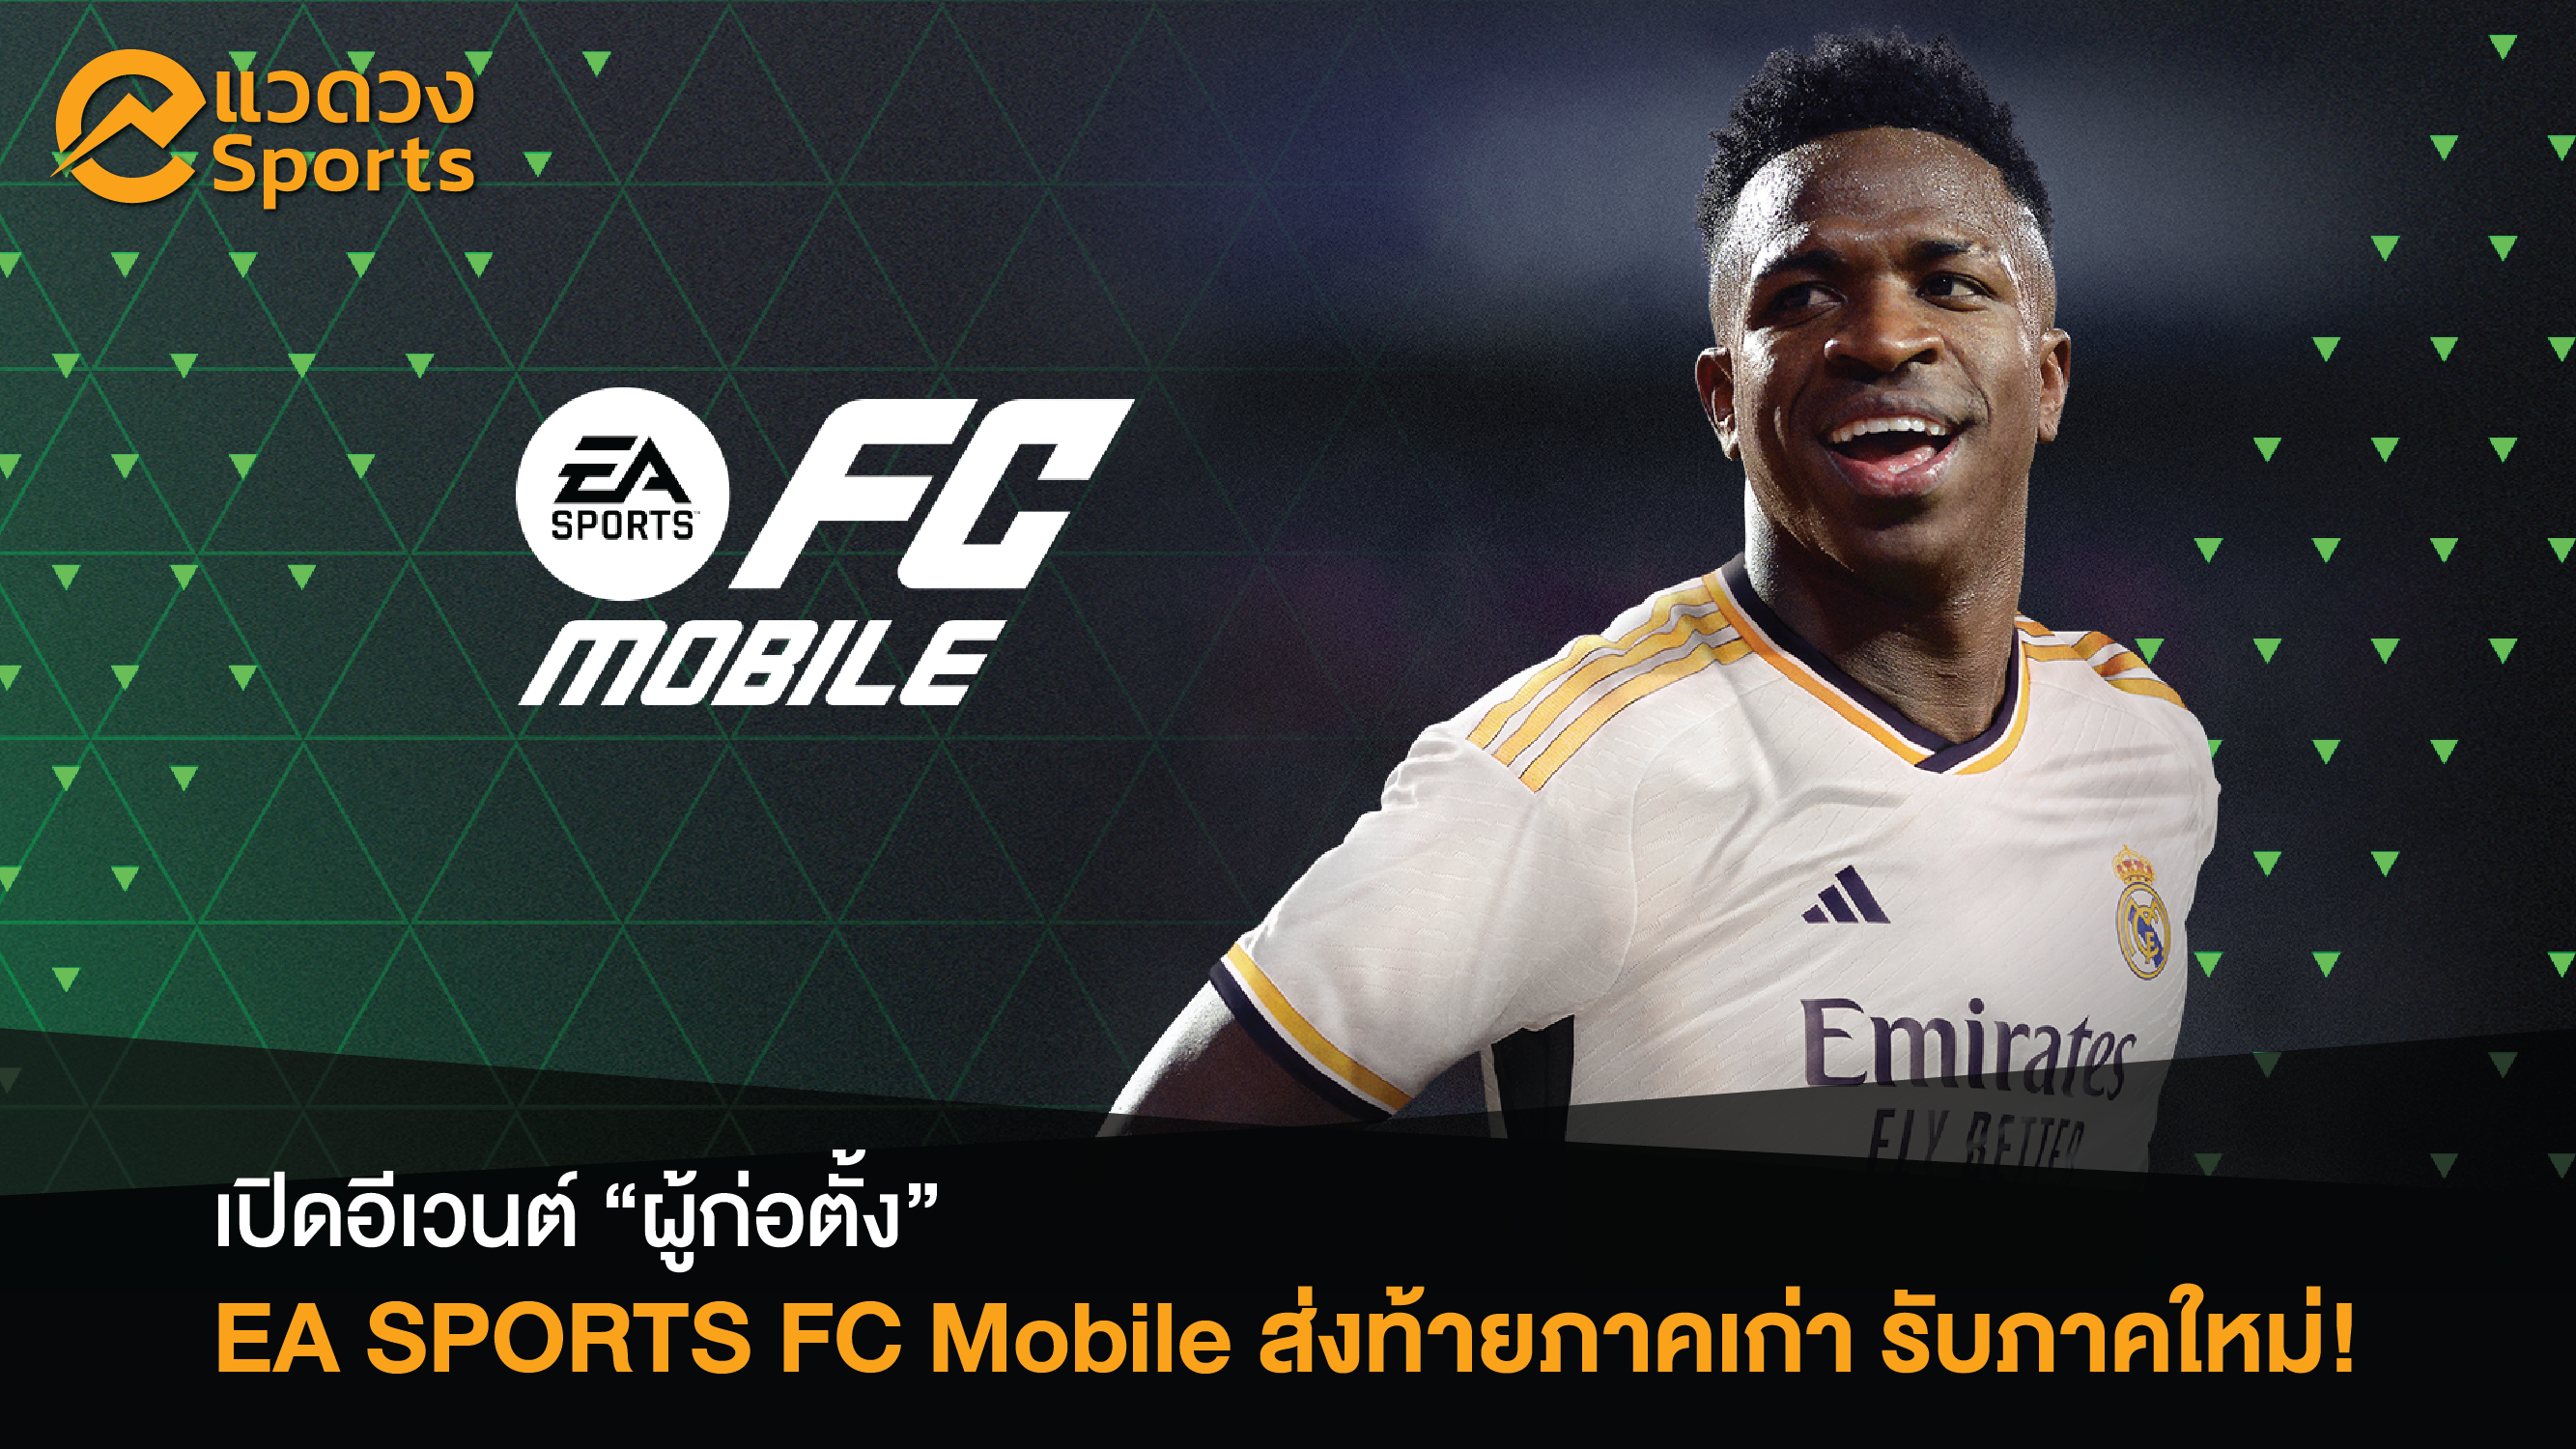 FIFA MOBILE รีแบรนด์ใหม่! เปิดอีเวนต์ FOUNDER รับ “EA SPORTS Mobile”